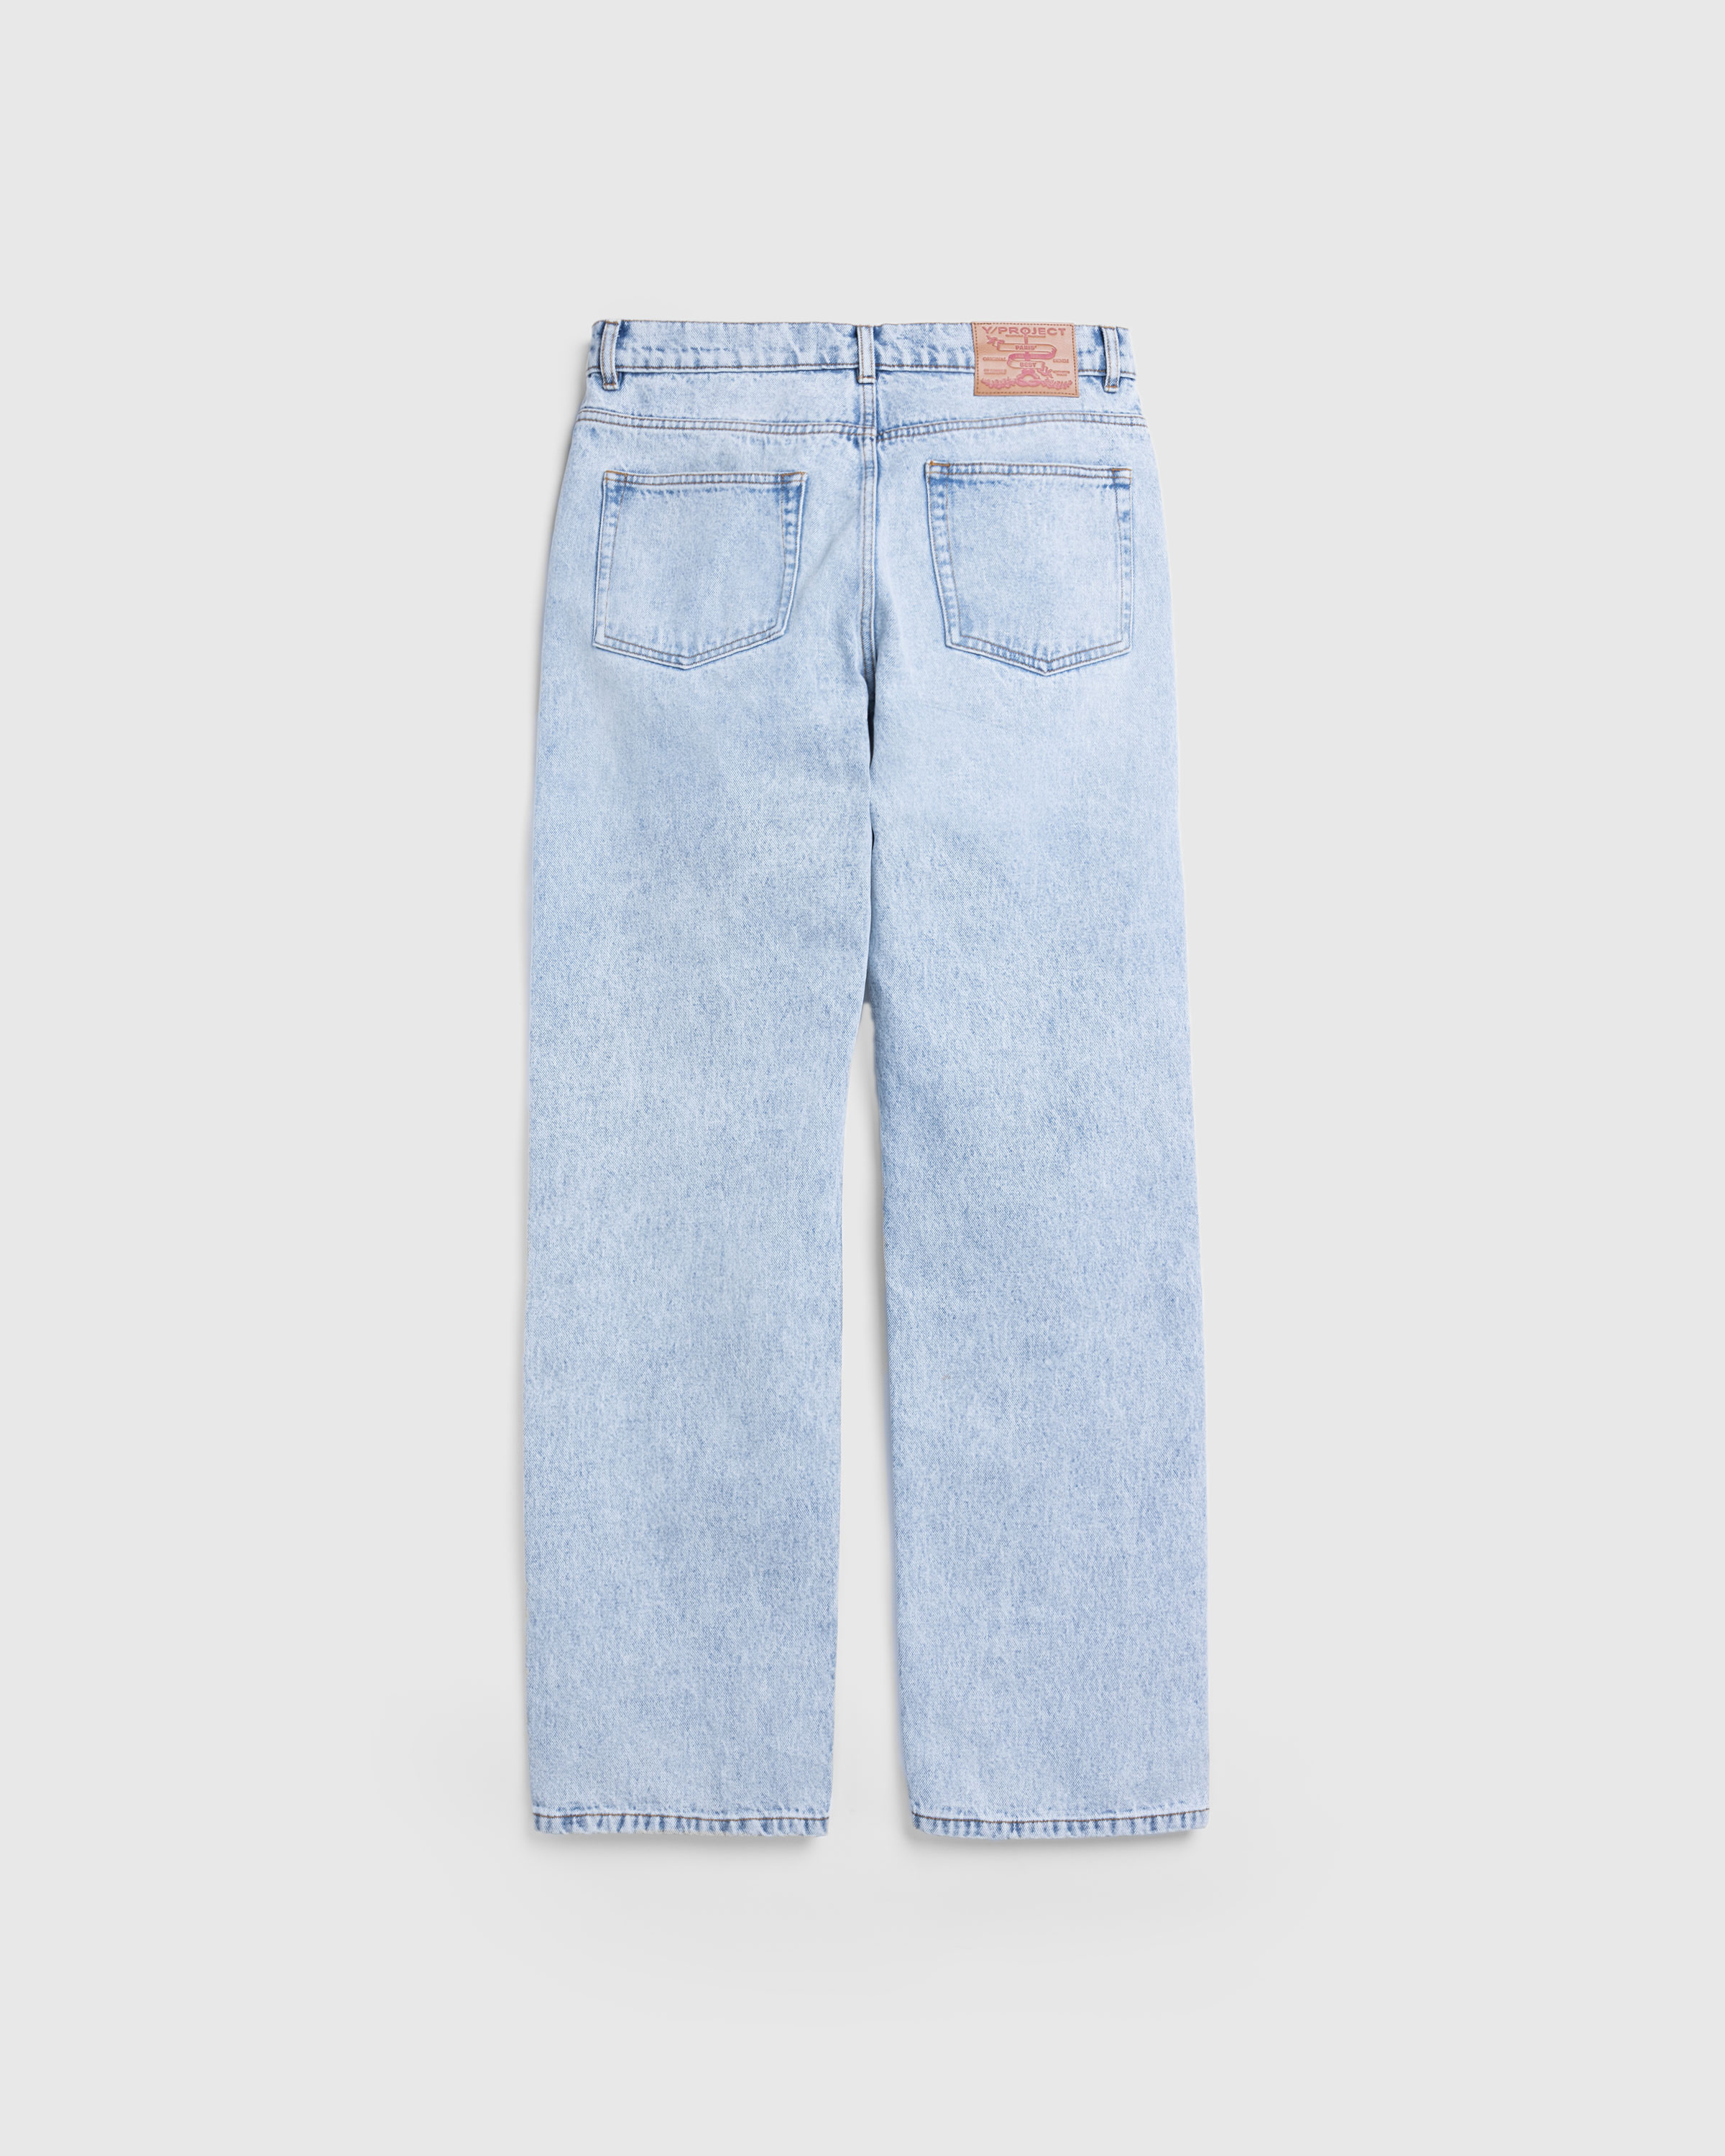 Y/Project – Rhinestone Jeans Blue - Denim - Blue - Image 3